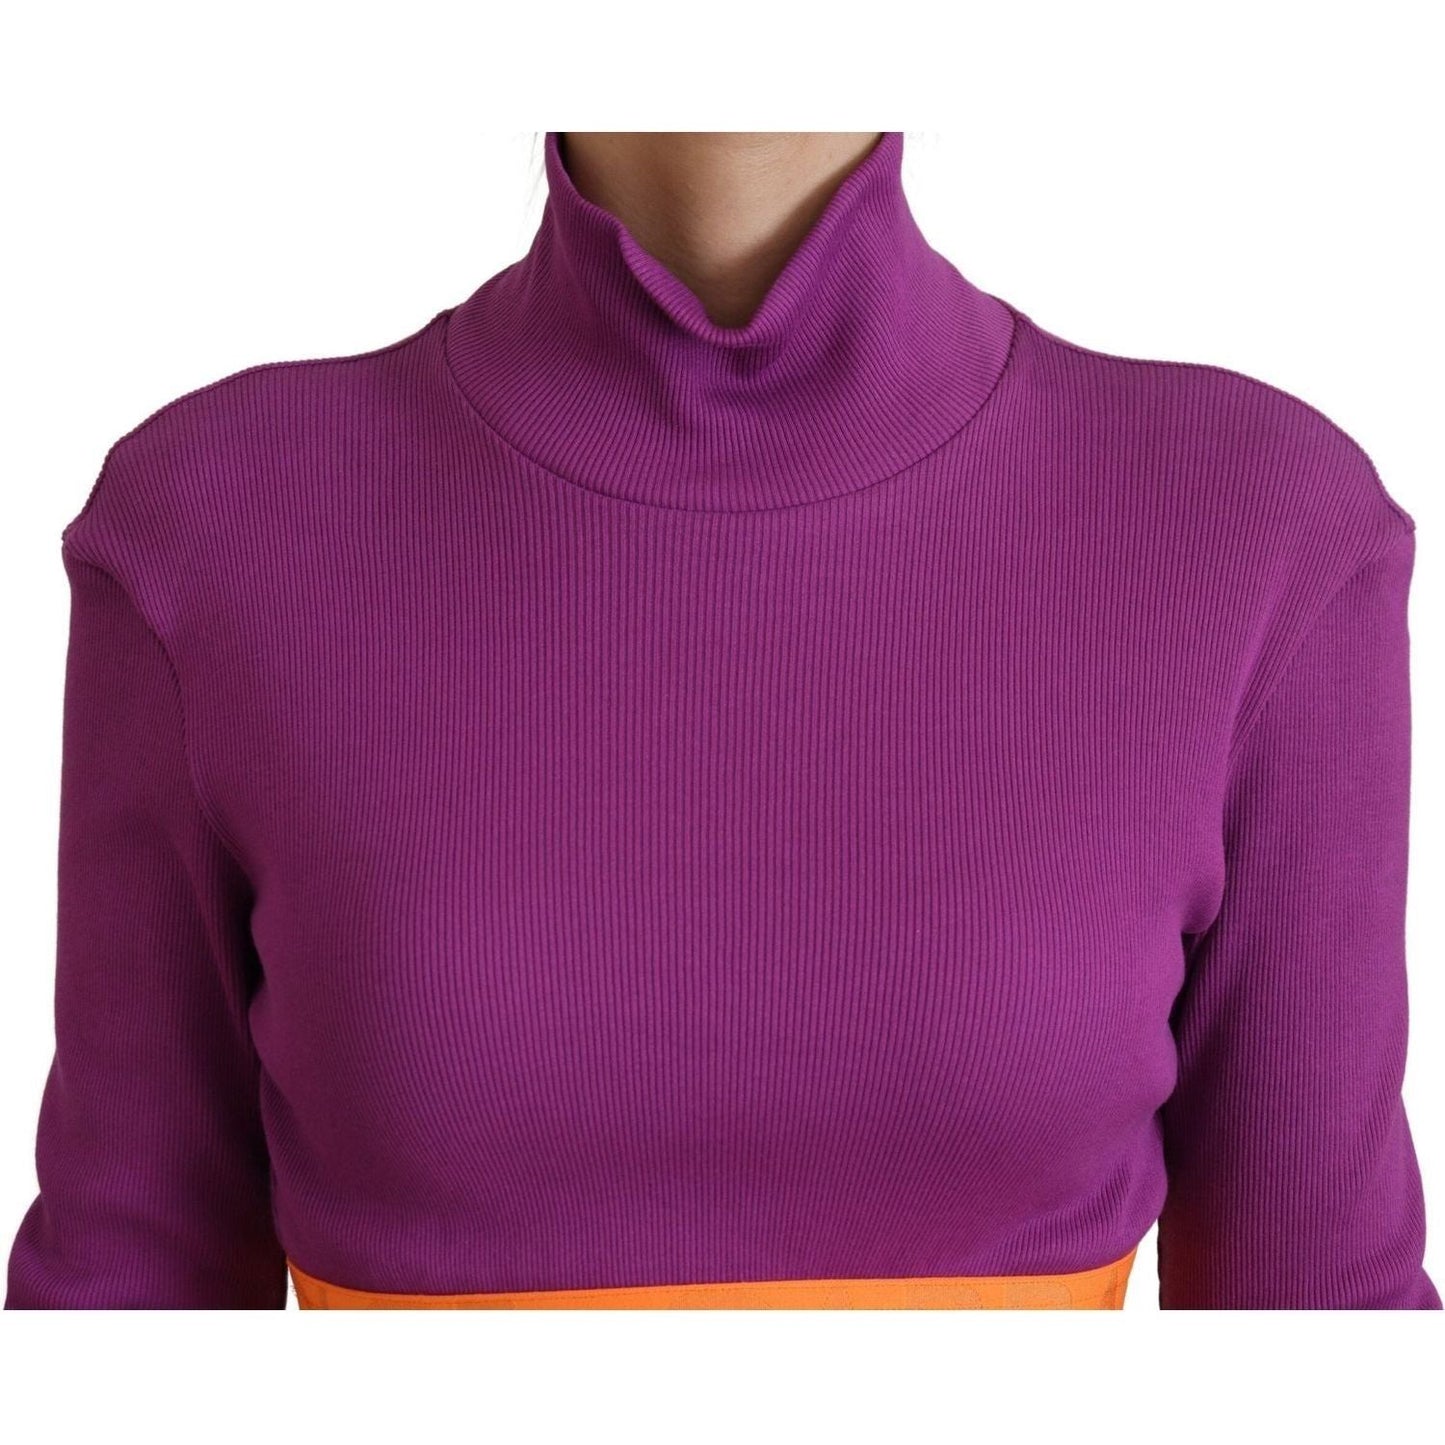 Dolce & Gabbana Elegant Purple Turtle Neck Pullover Sweater purple-turtle-neck-cropped-pullover-sweater IMG_2707-scaled-3f08ea7e-4fe.jpg